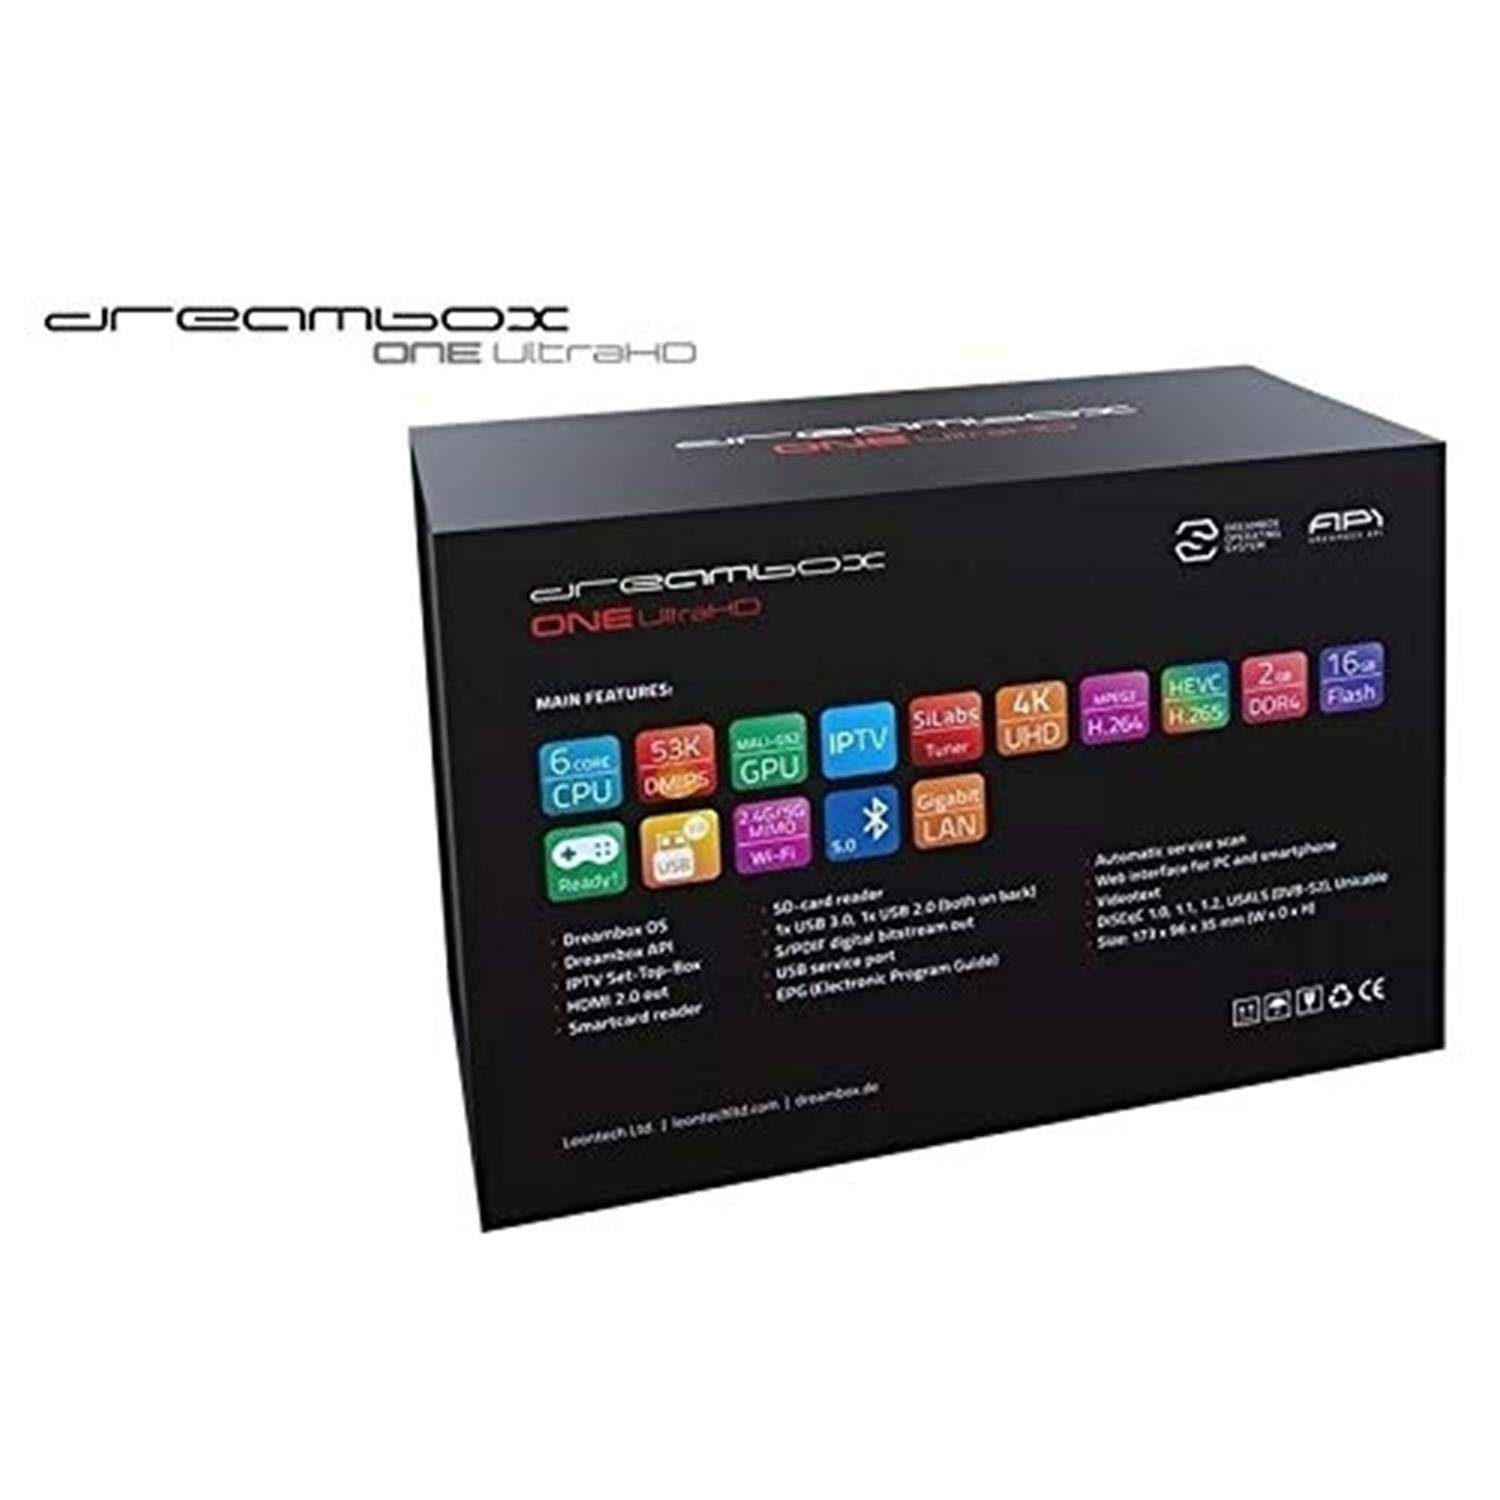 Dreambox Tuner Ultra E2 2x (4K, Multistream HD One 2160p, Dreambox Satellitenreceiver DVB-S2X